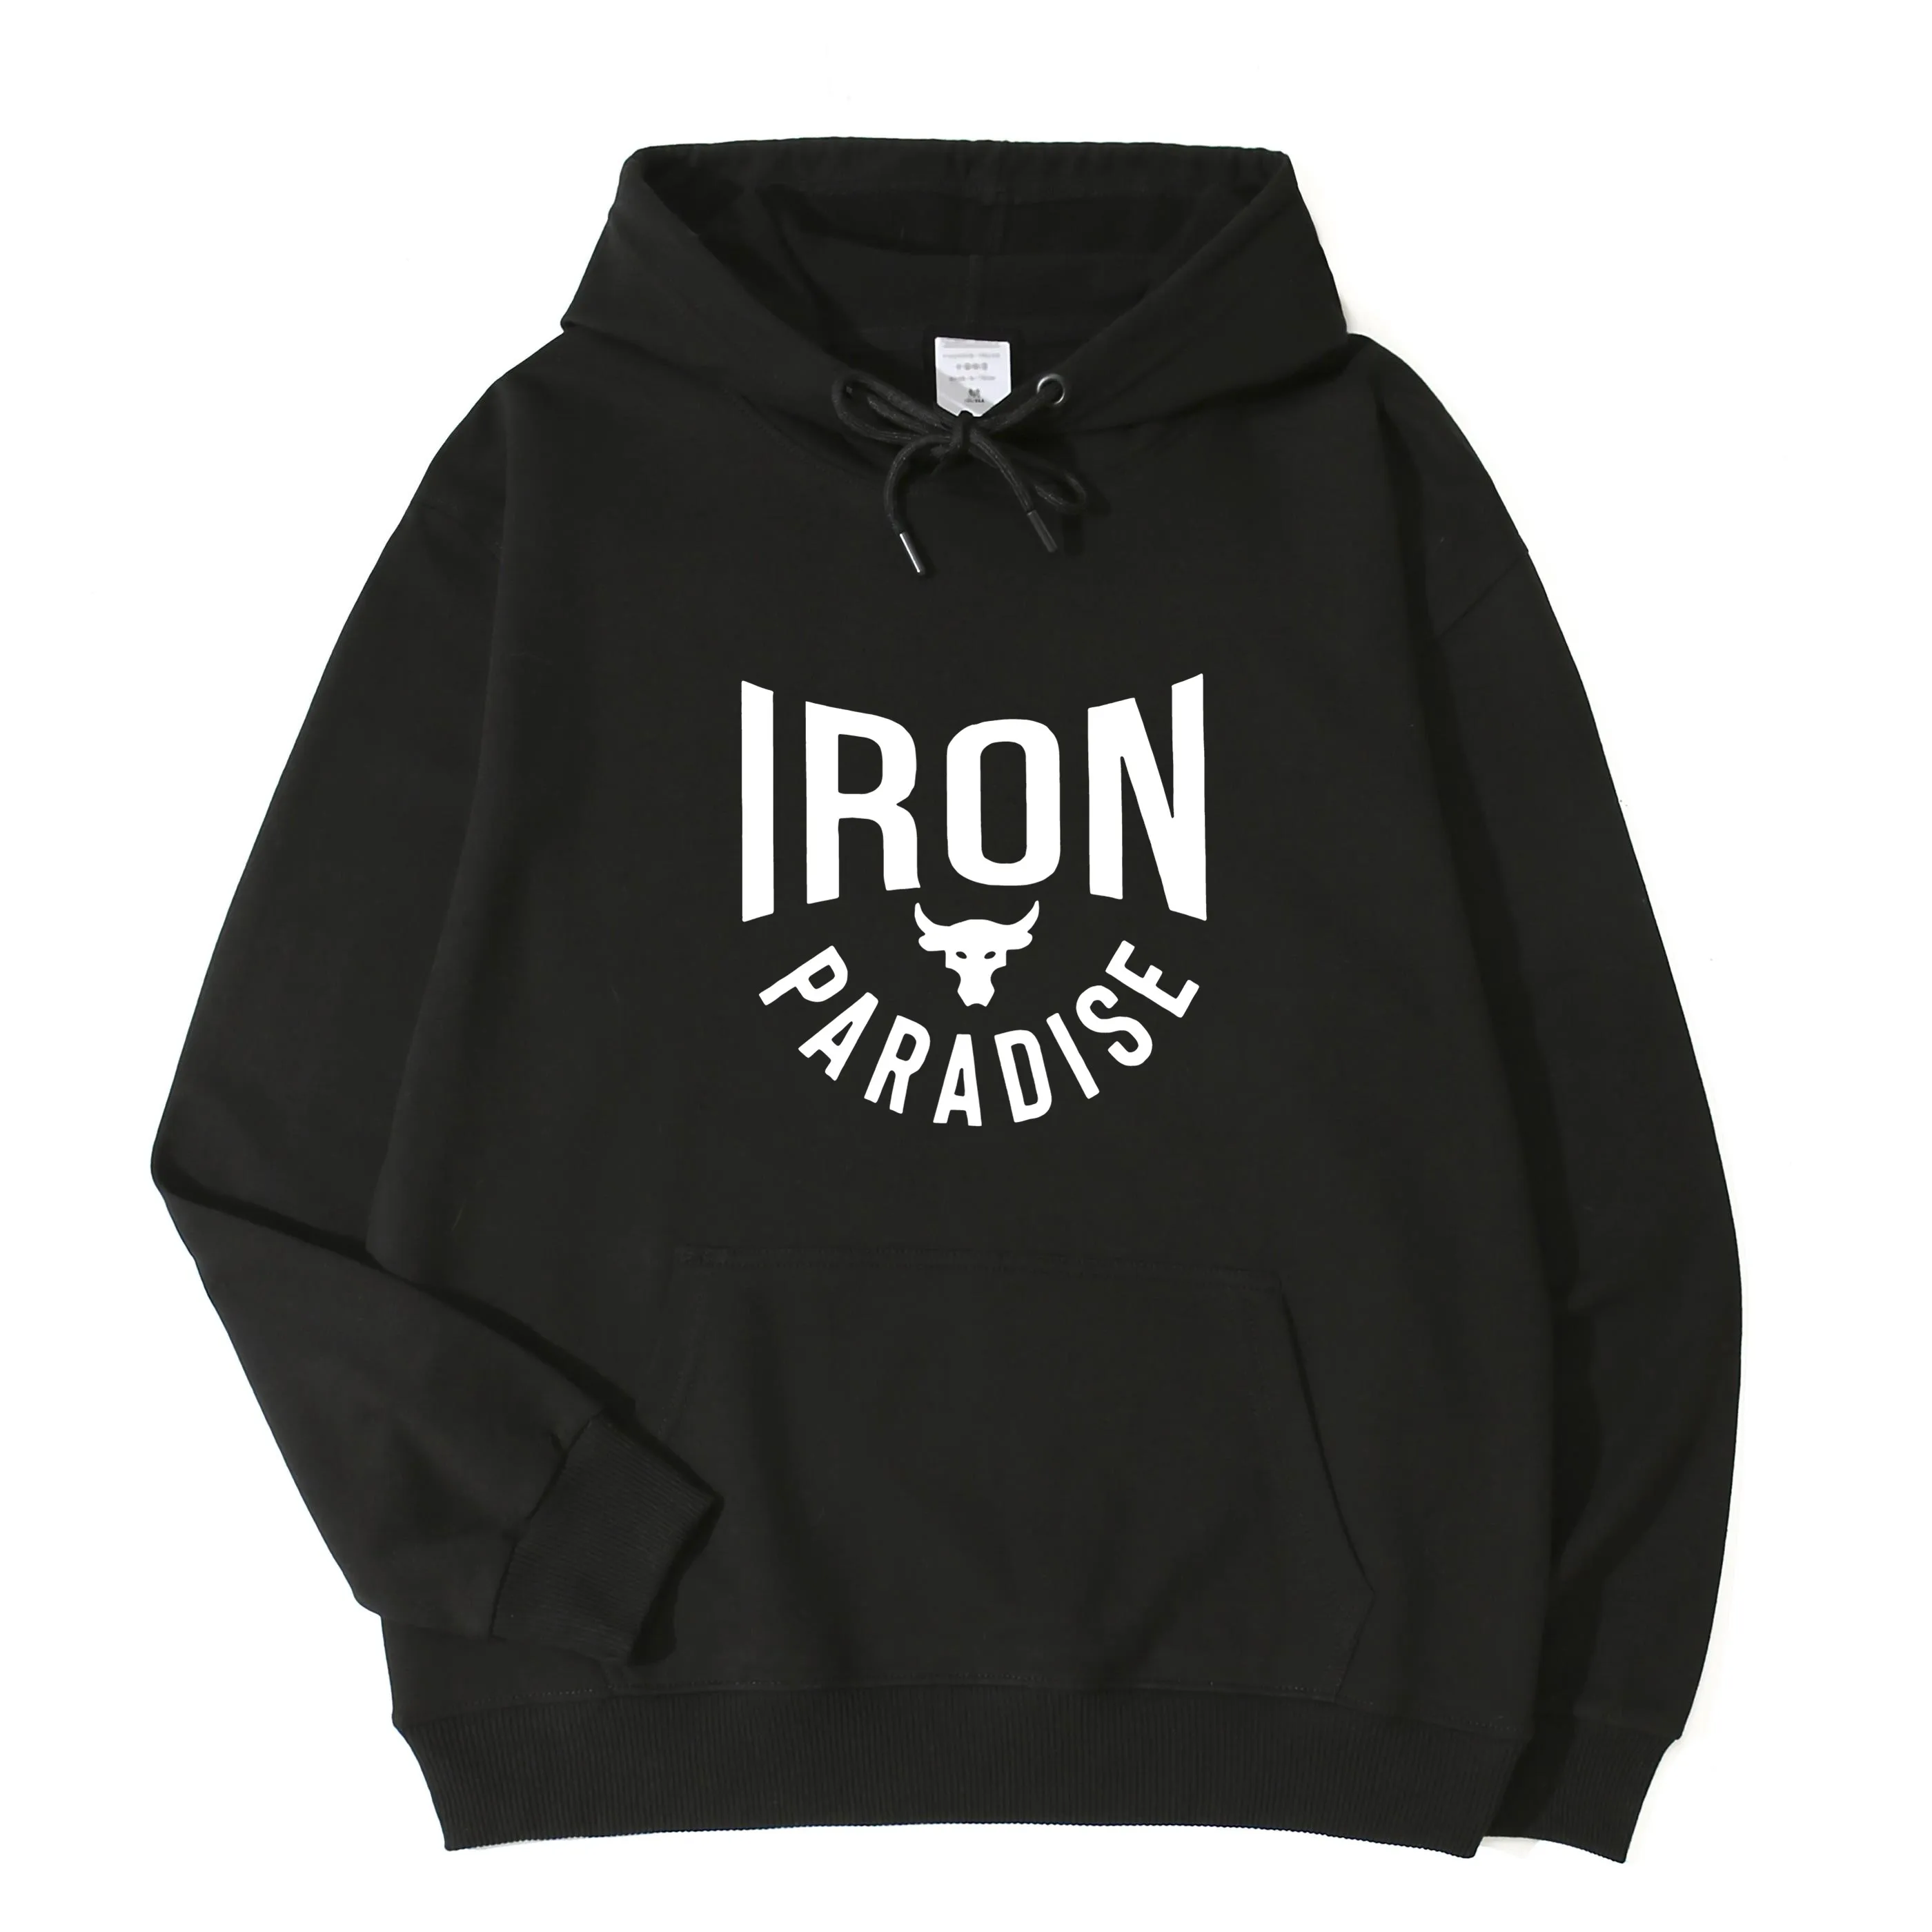 

Iron Paradise Brahma Bull Project - Rock High Quality Printed Hoodie 100% Cotton Pocket Sweatshirt Unique Unisex Top Asian Size